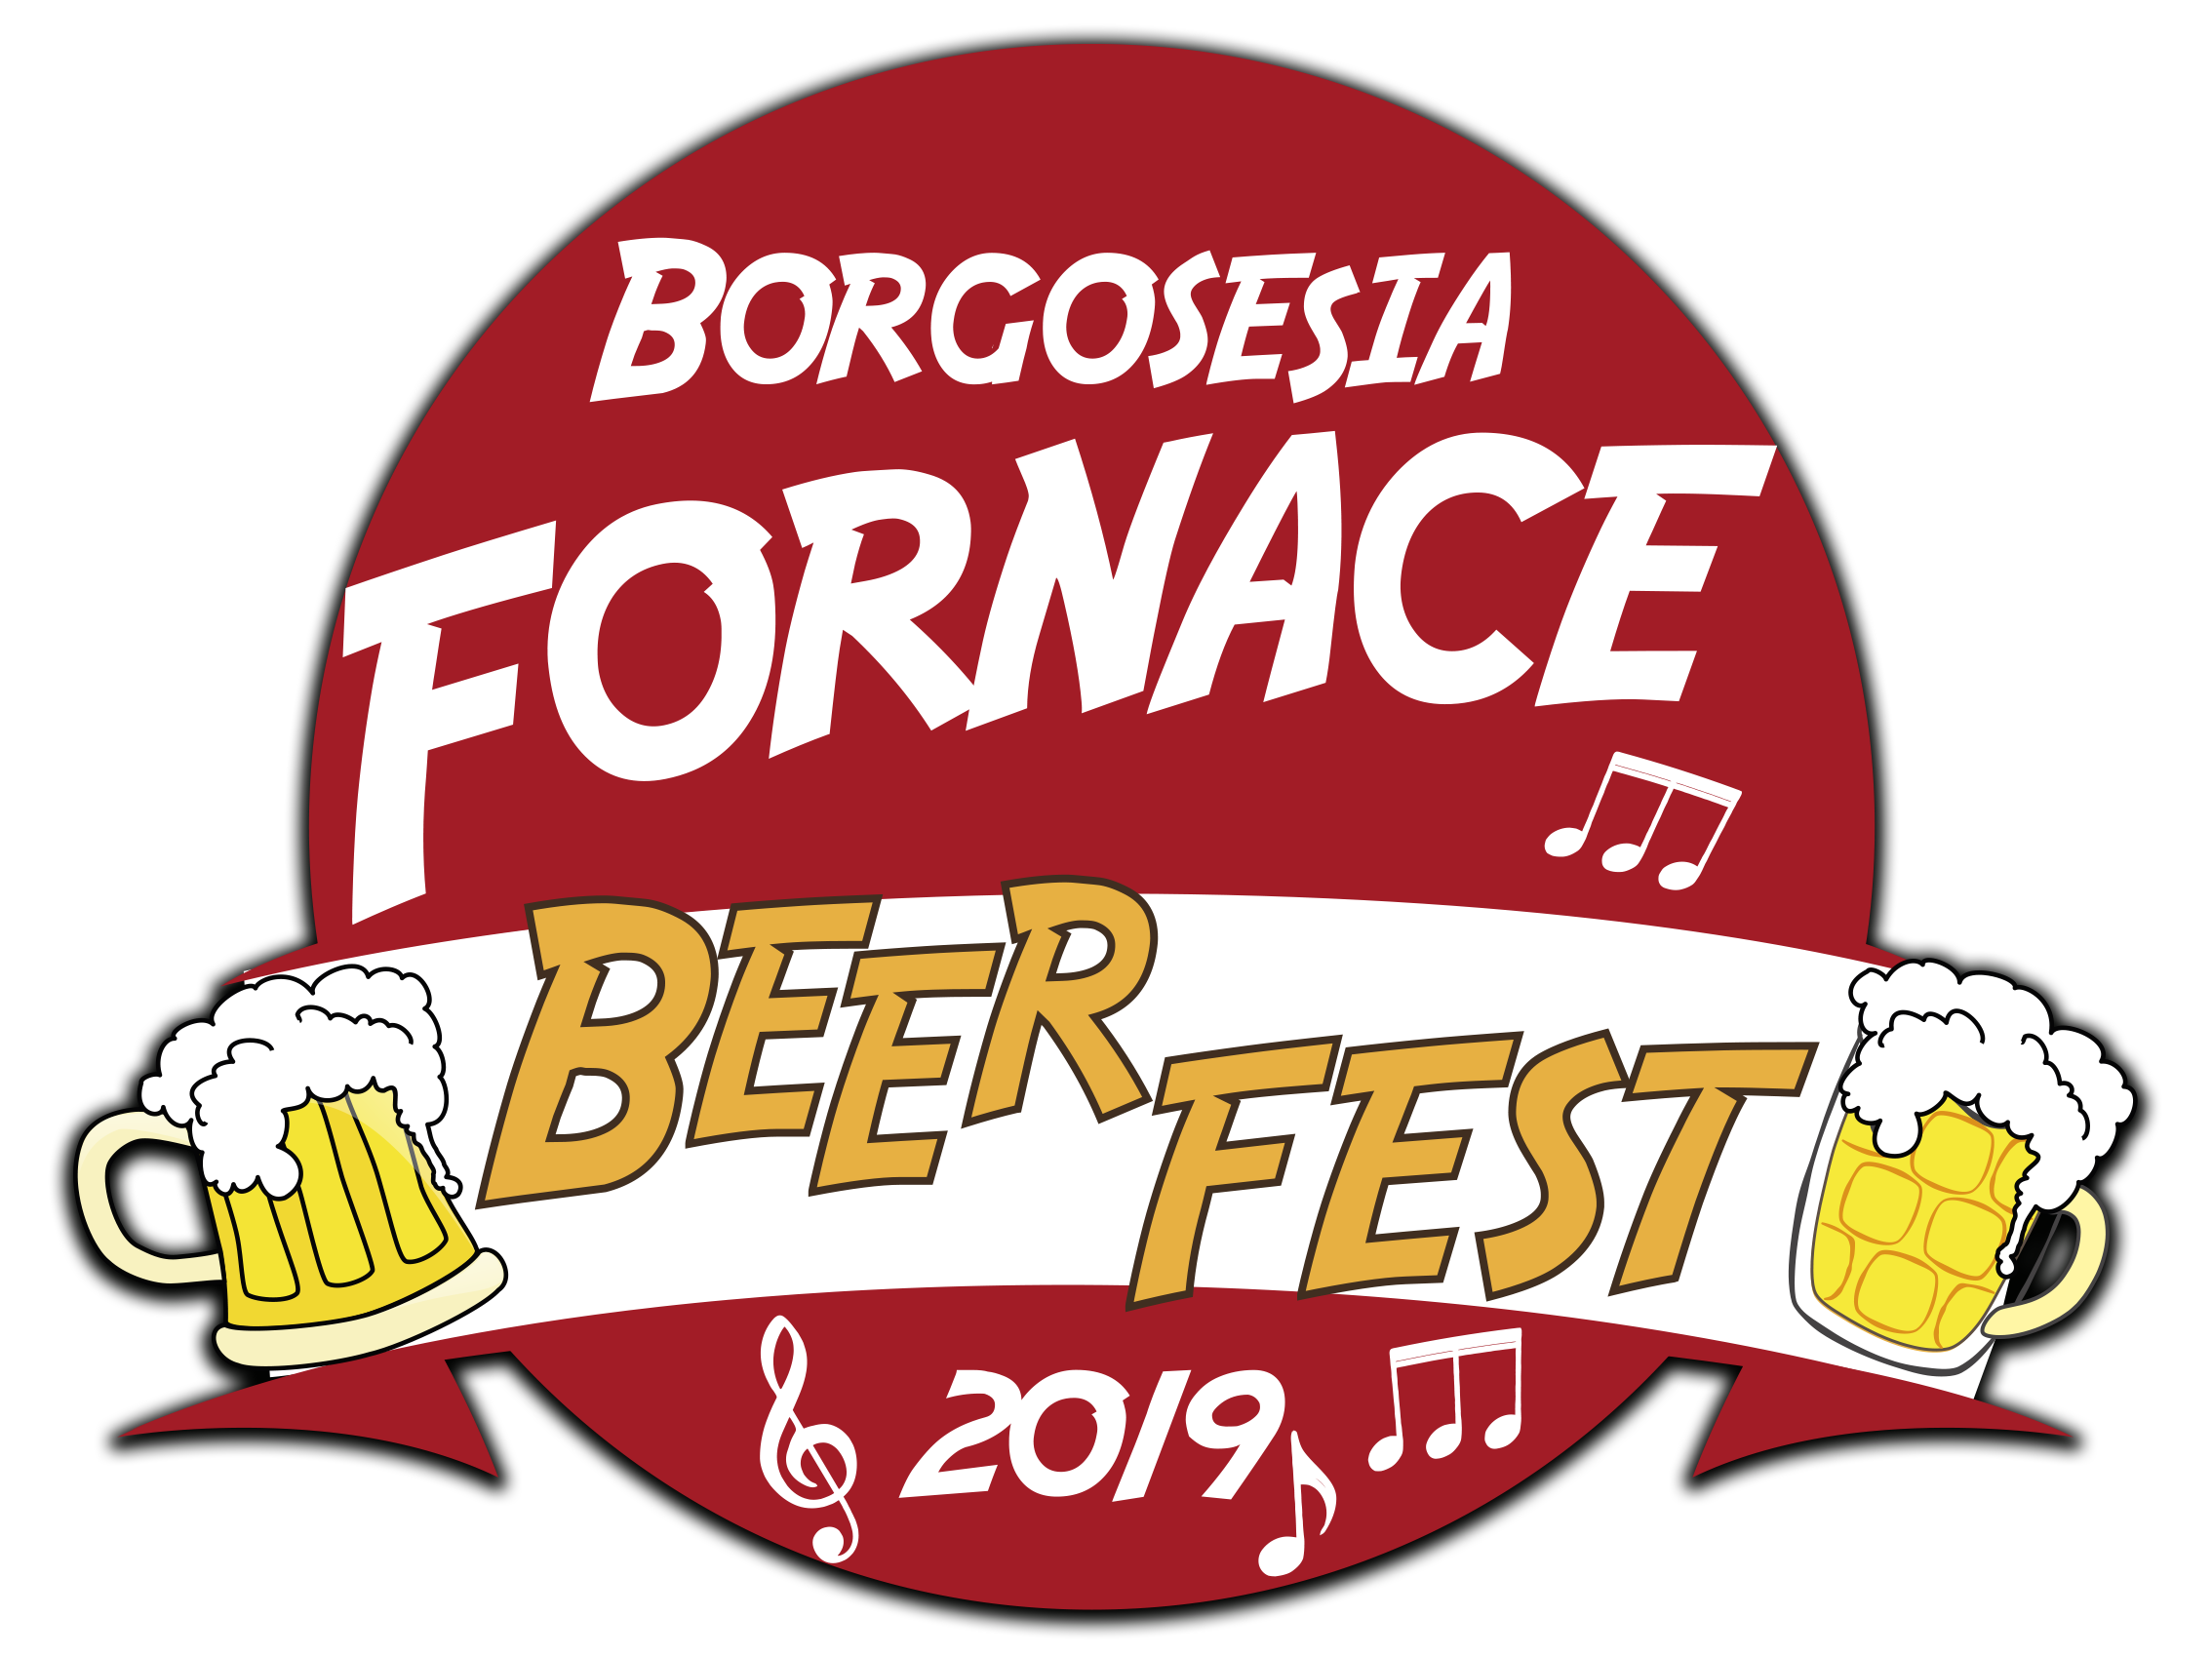 rione-fornace-borgosesia-beer-fest-2019